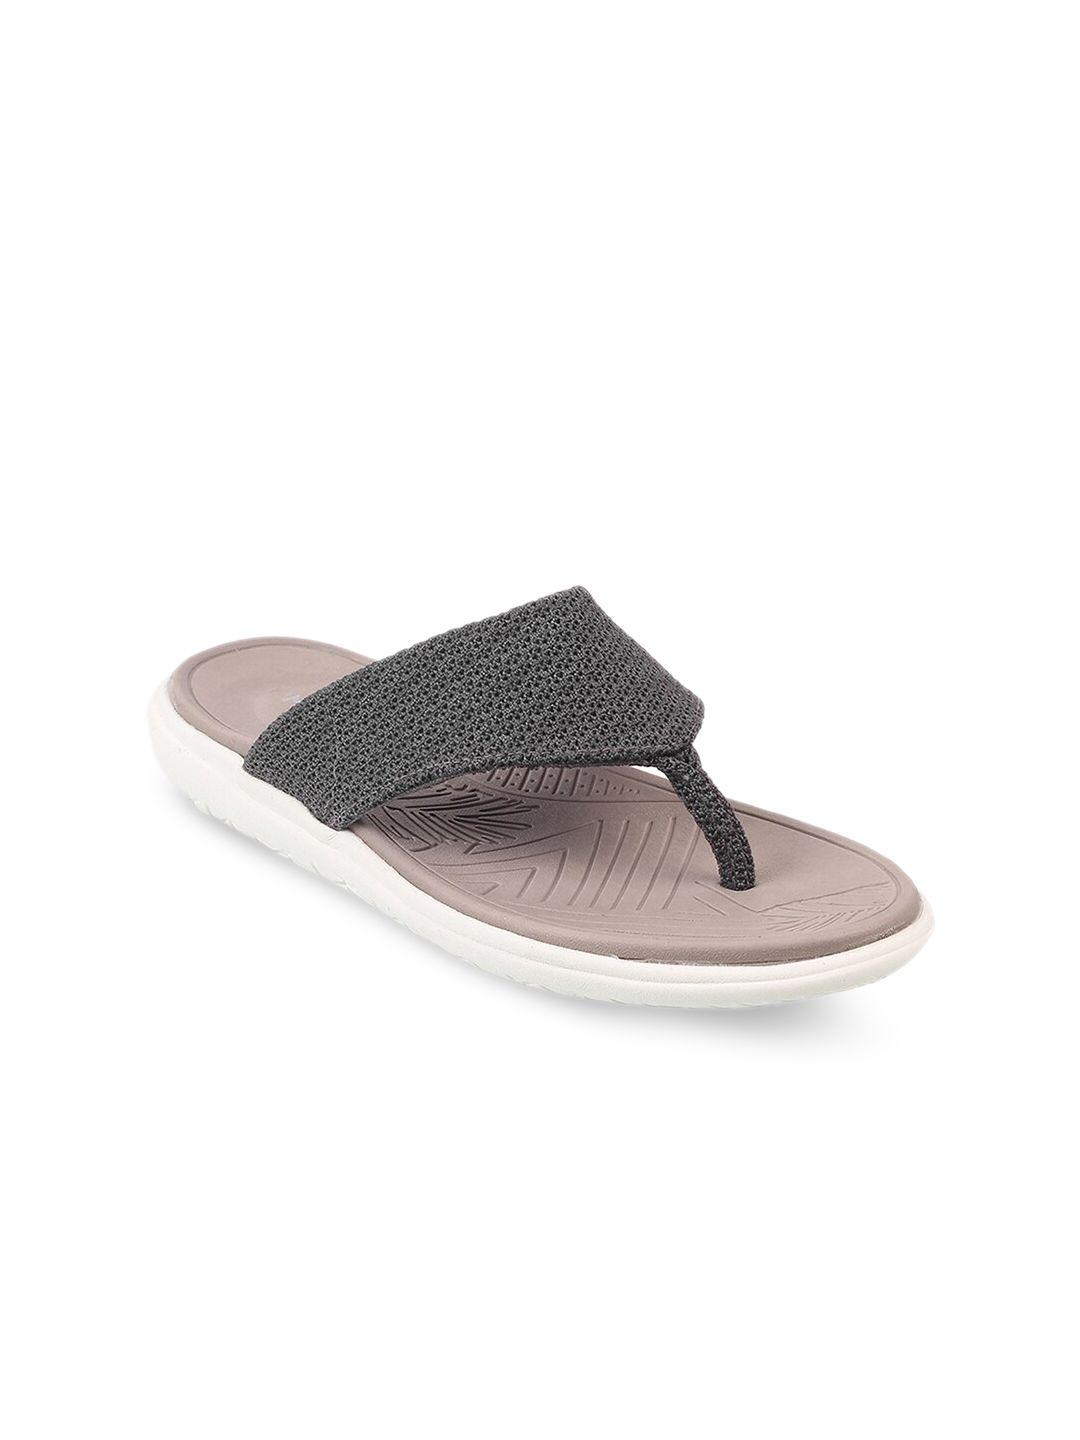 mochi women grey open toe flats